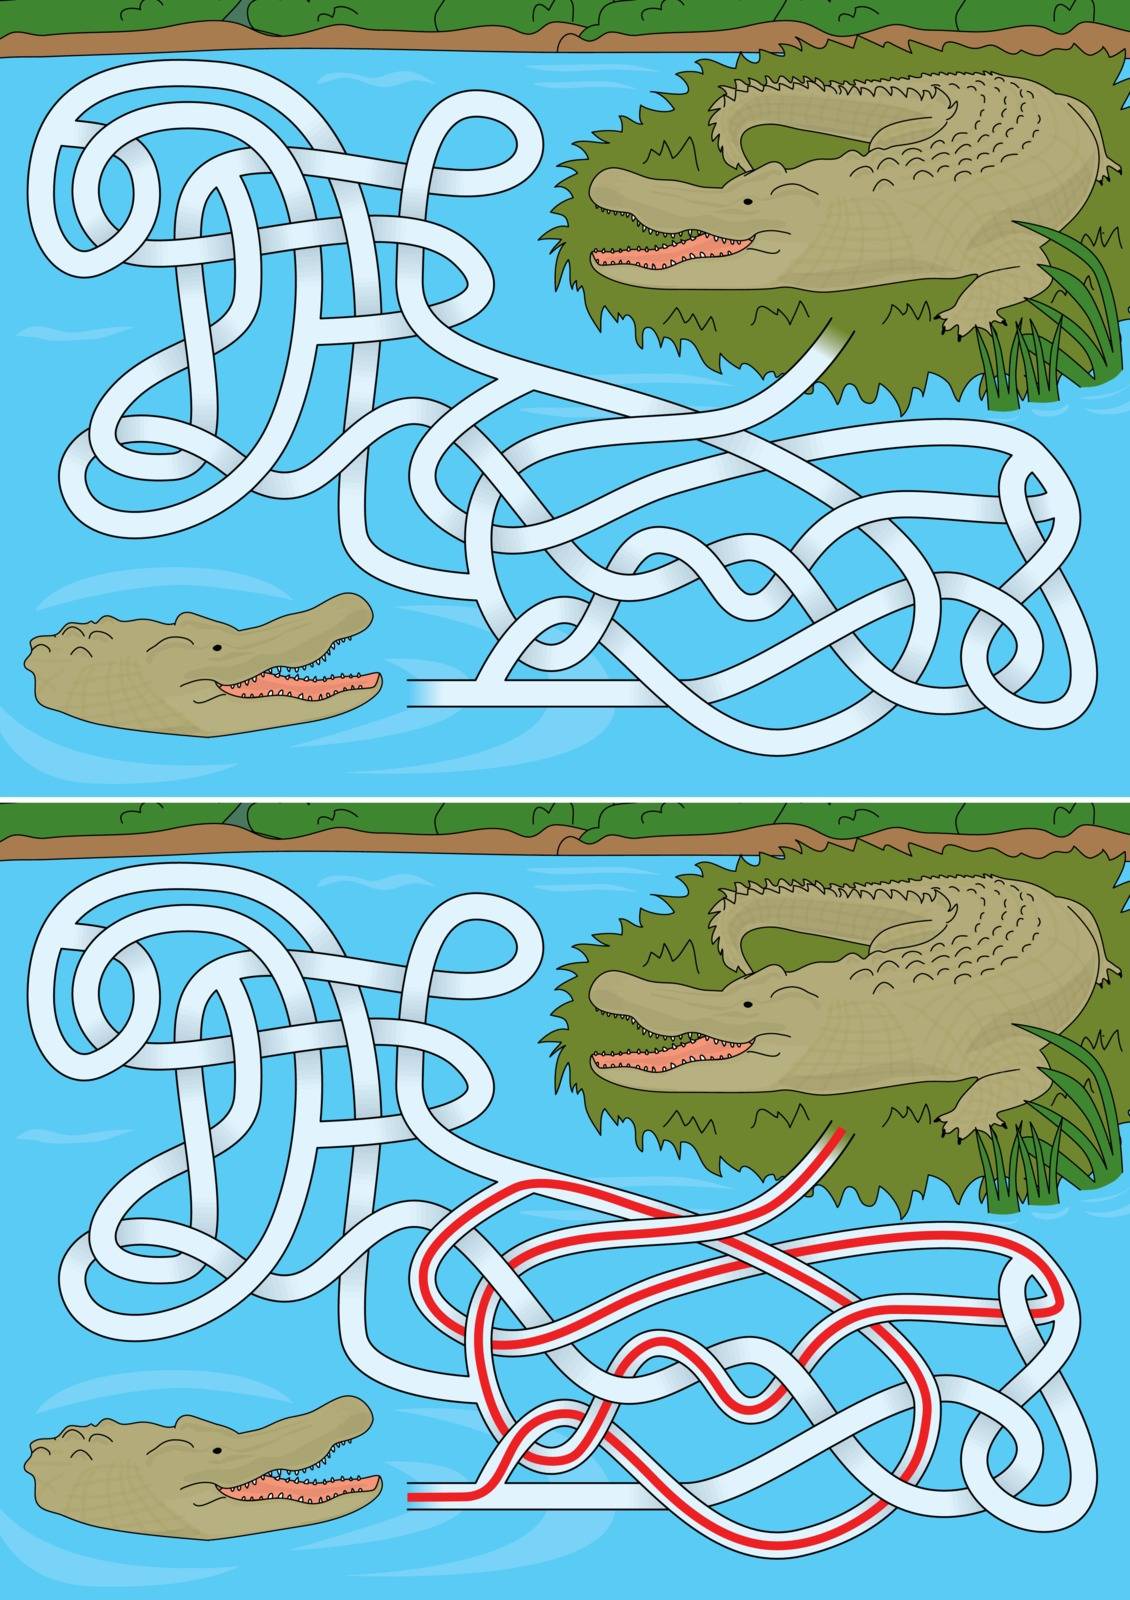 Crocodile maze by nahhan